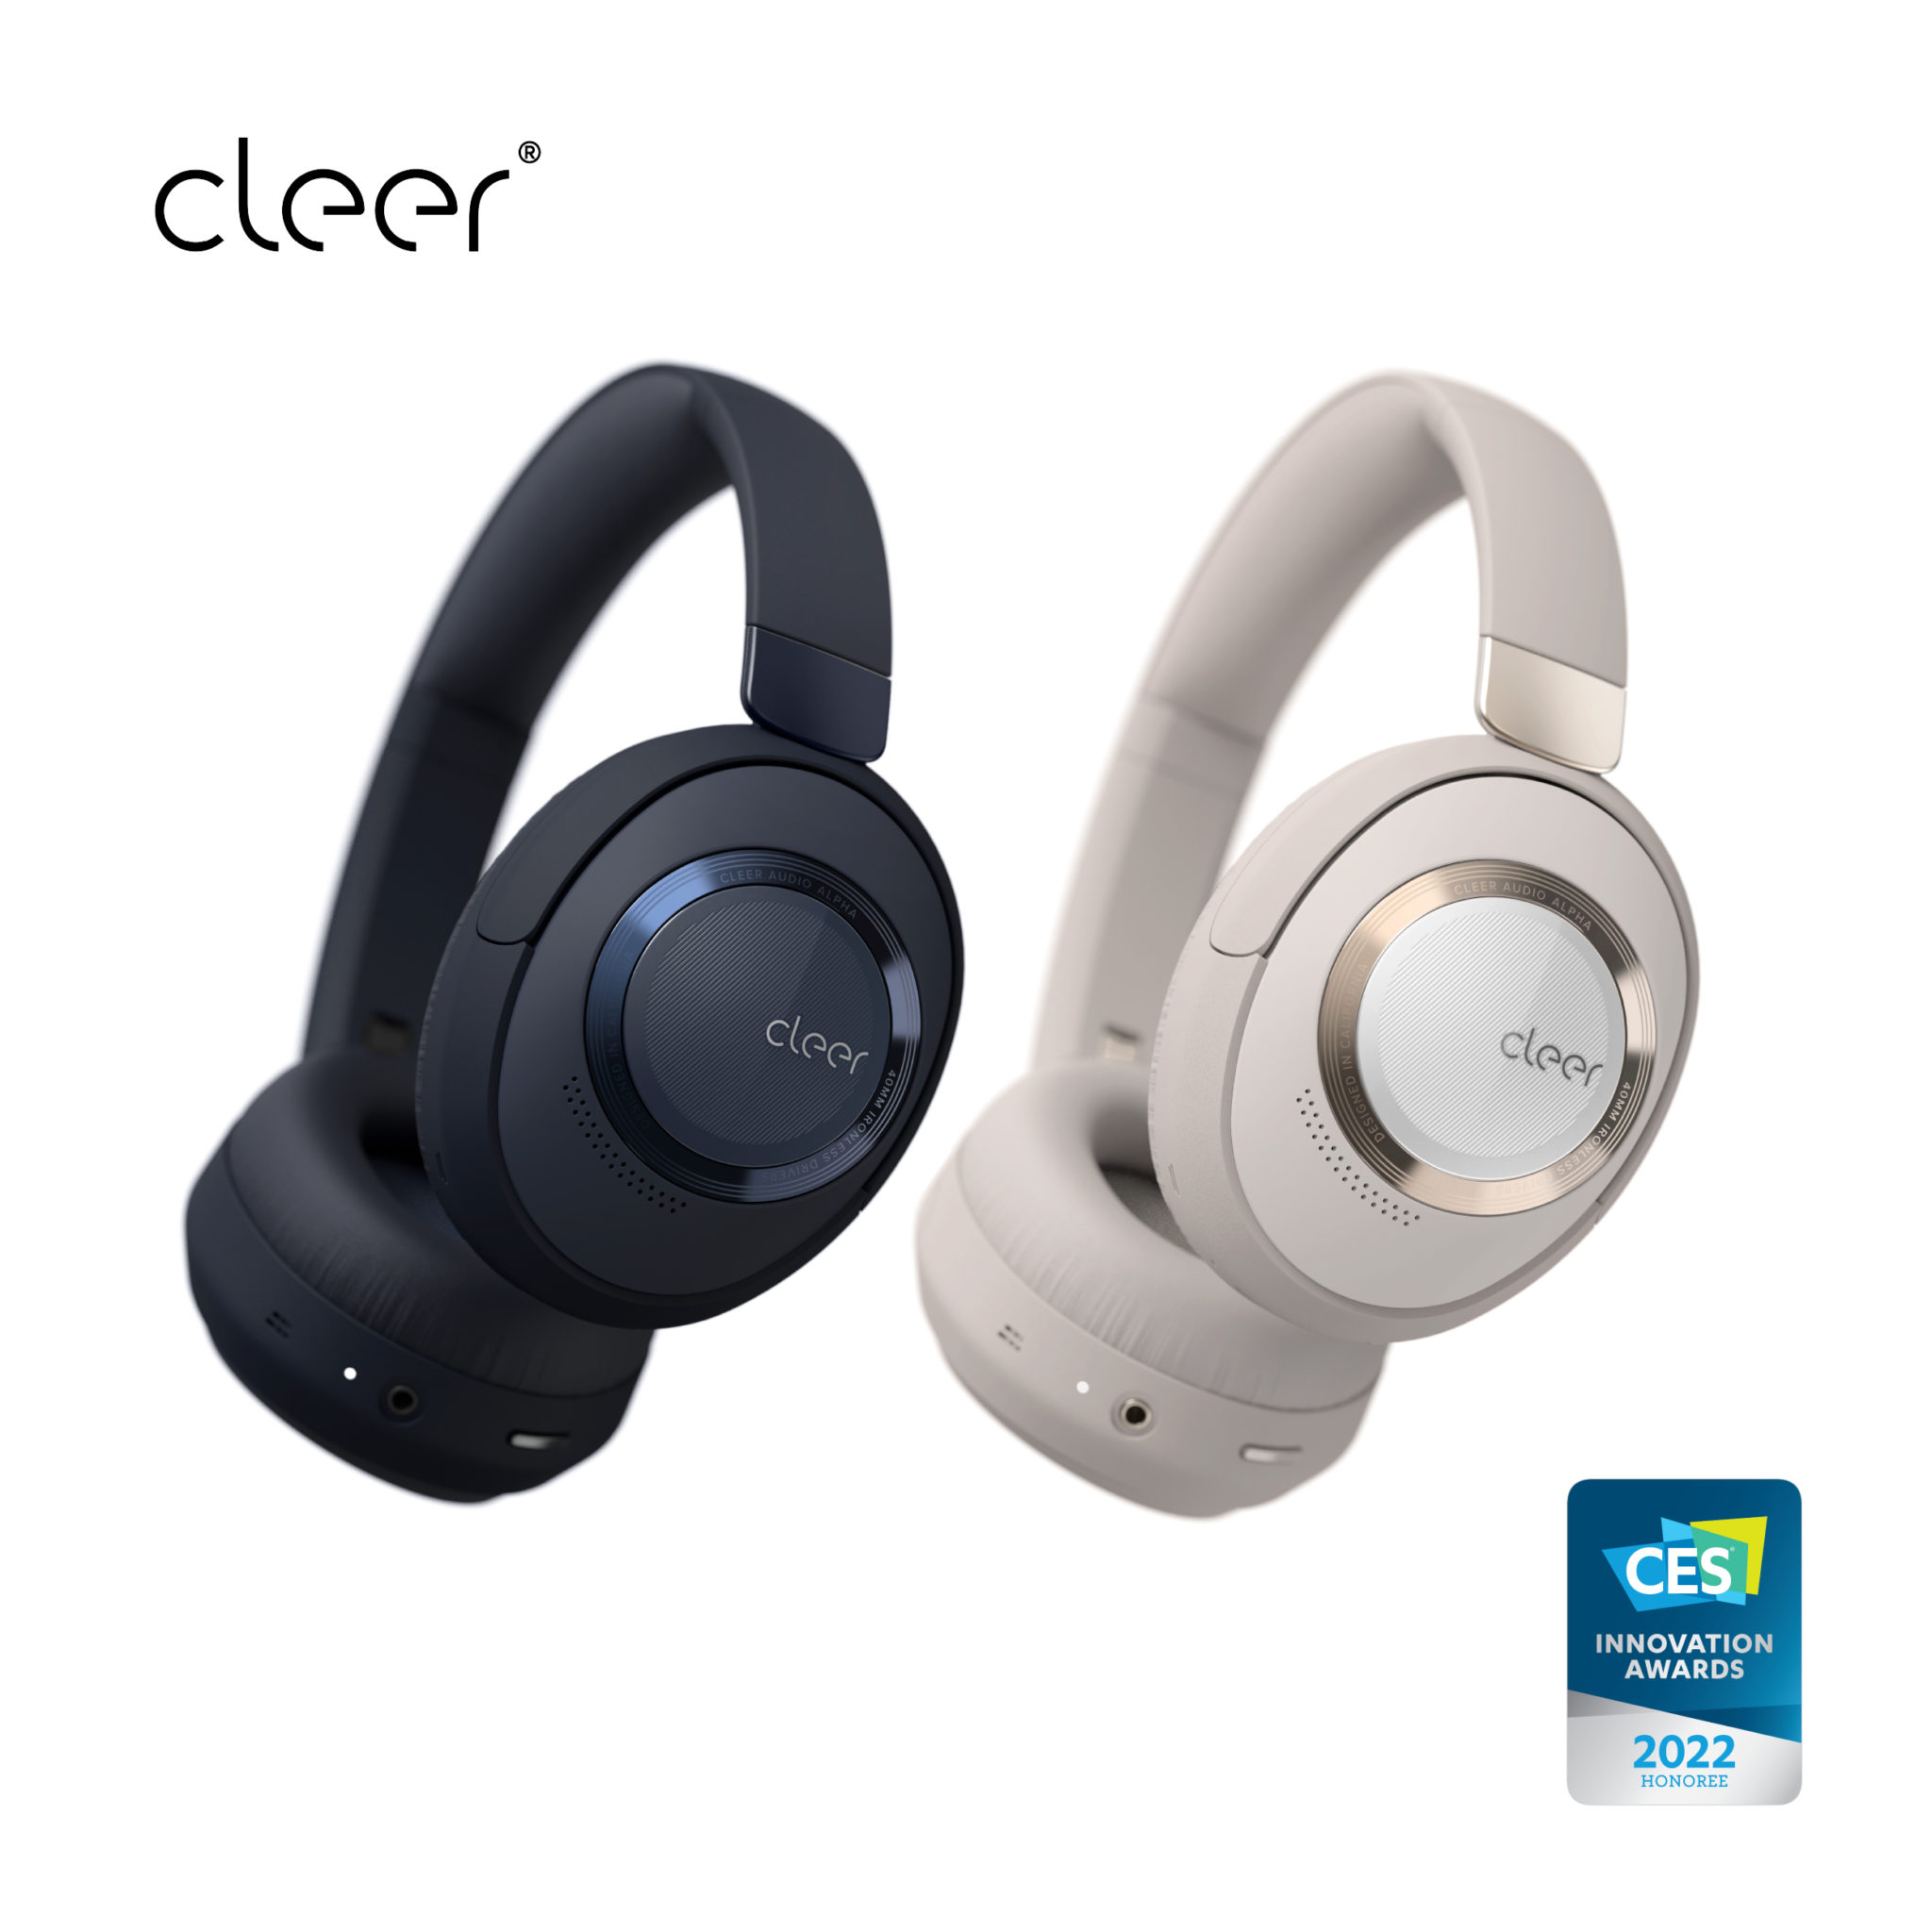 Cleer Audio Introduces ALPHA Wireless Headphones with Dirac Virtuo